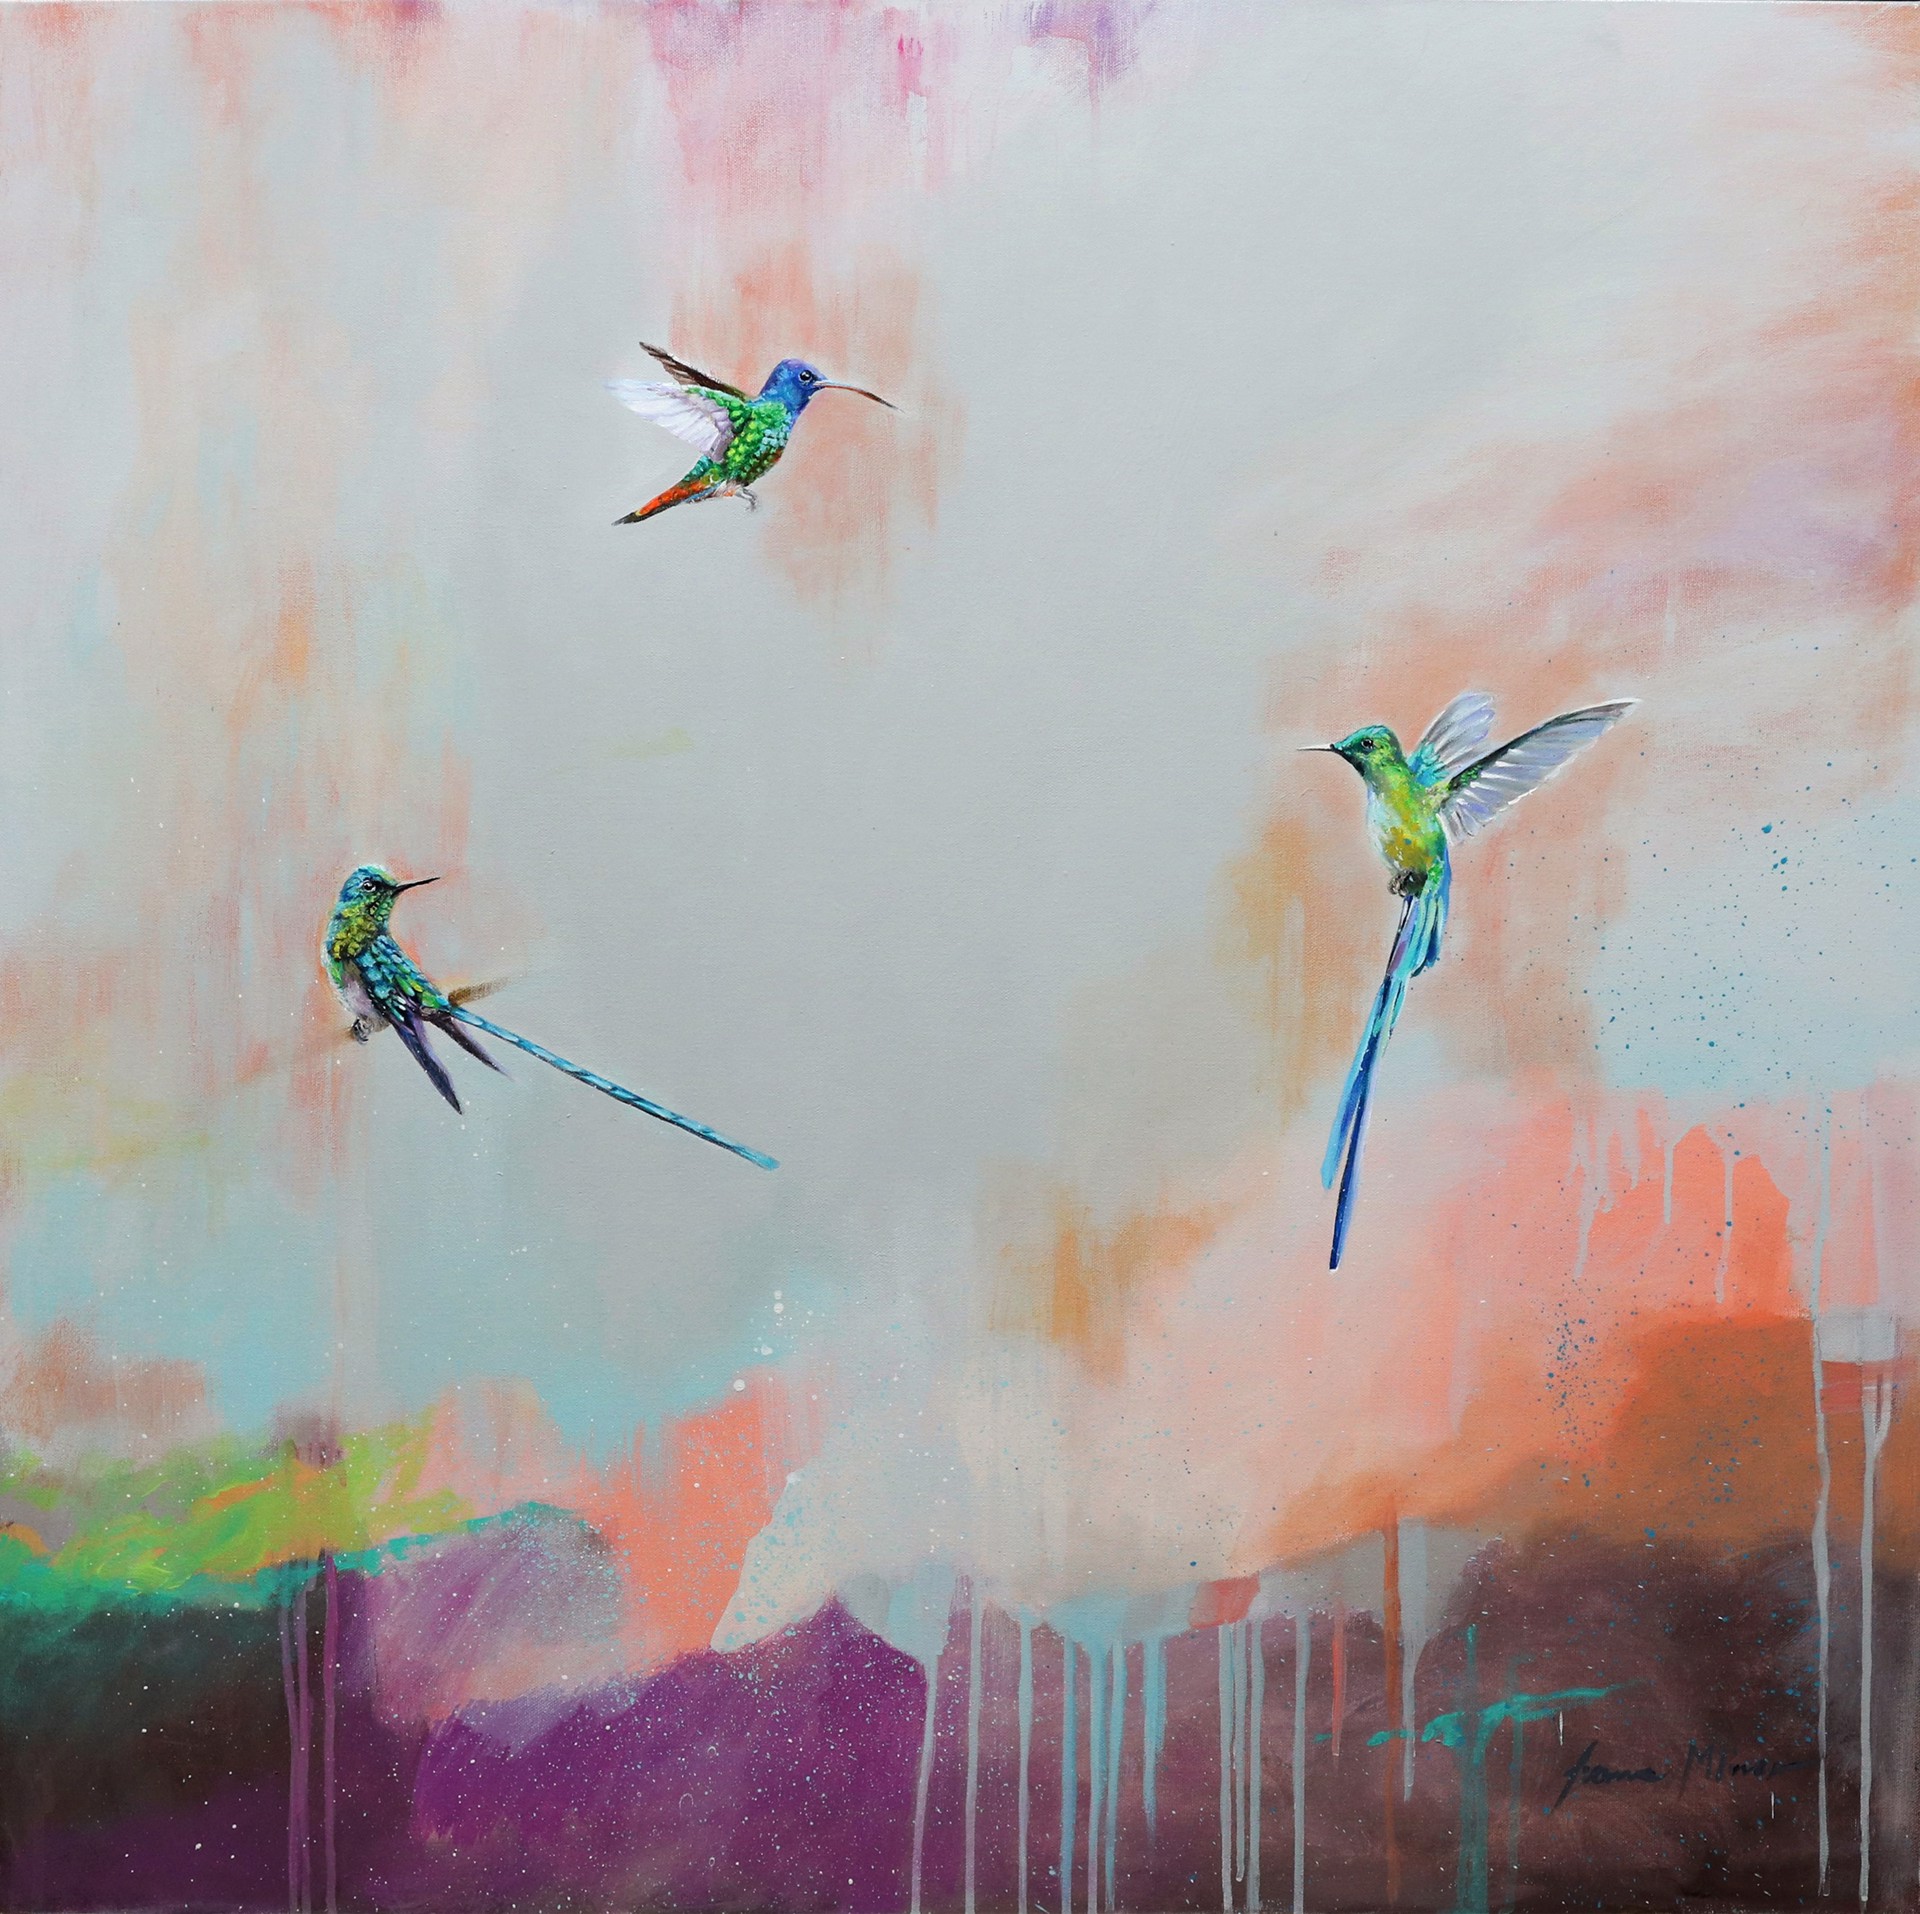 Catching Flight by Ivana Mlinar